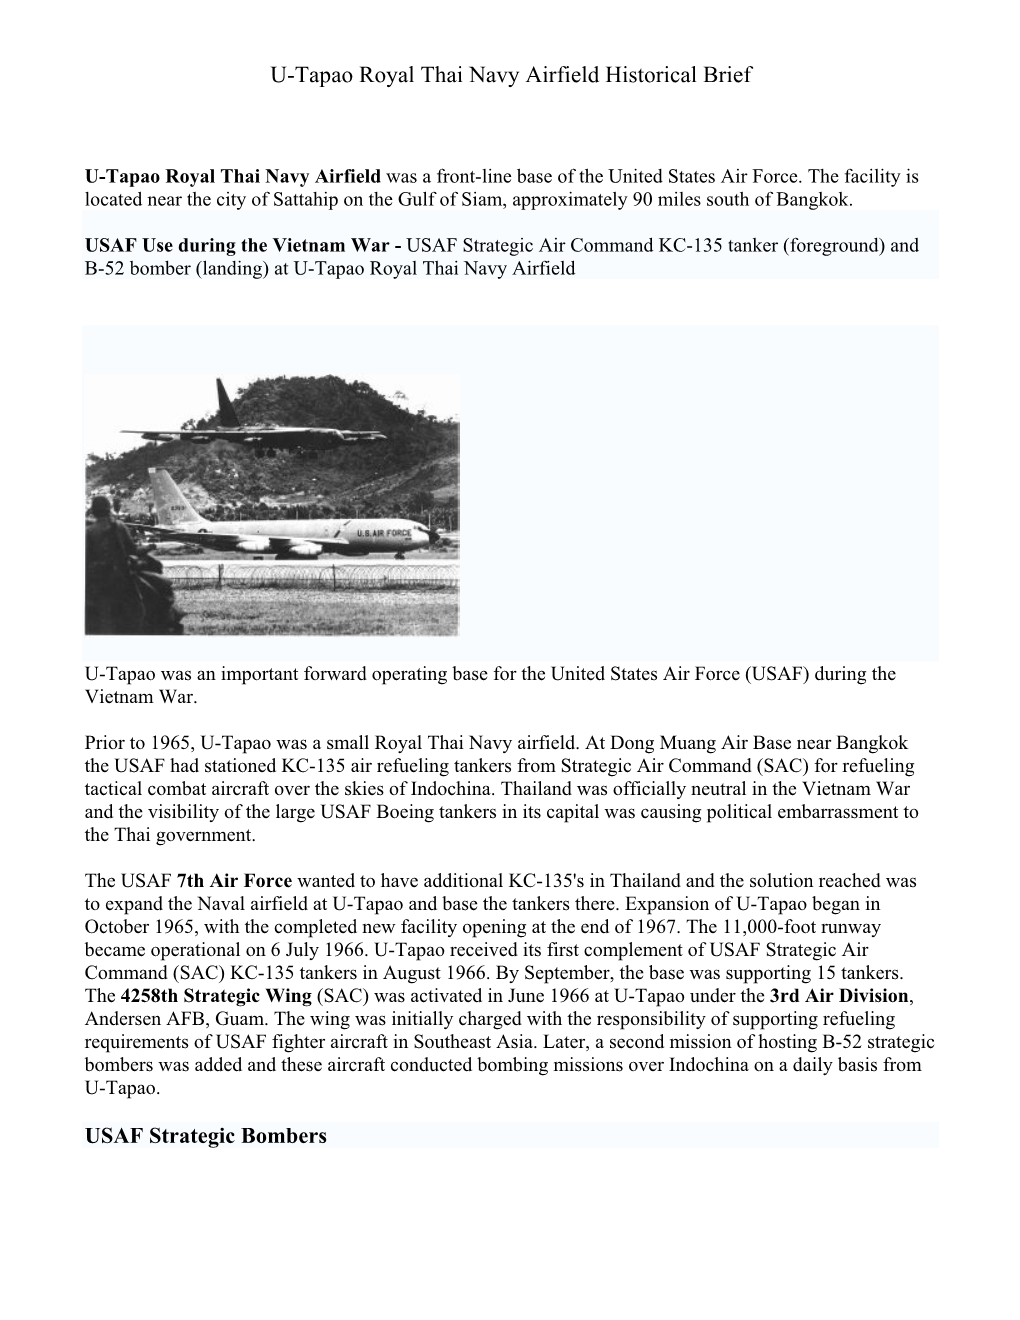 U-Tapao Royal Thai Navy Airfield Historical Brief USAF Strategic Bombers